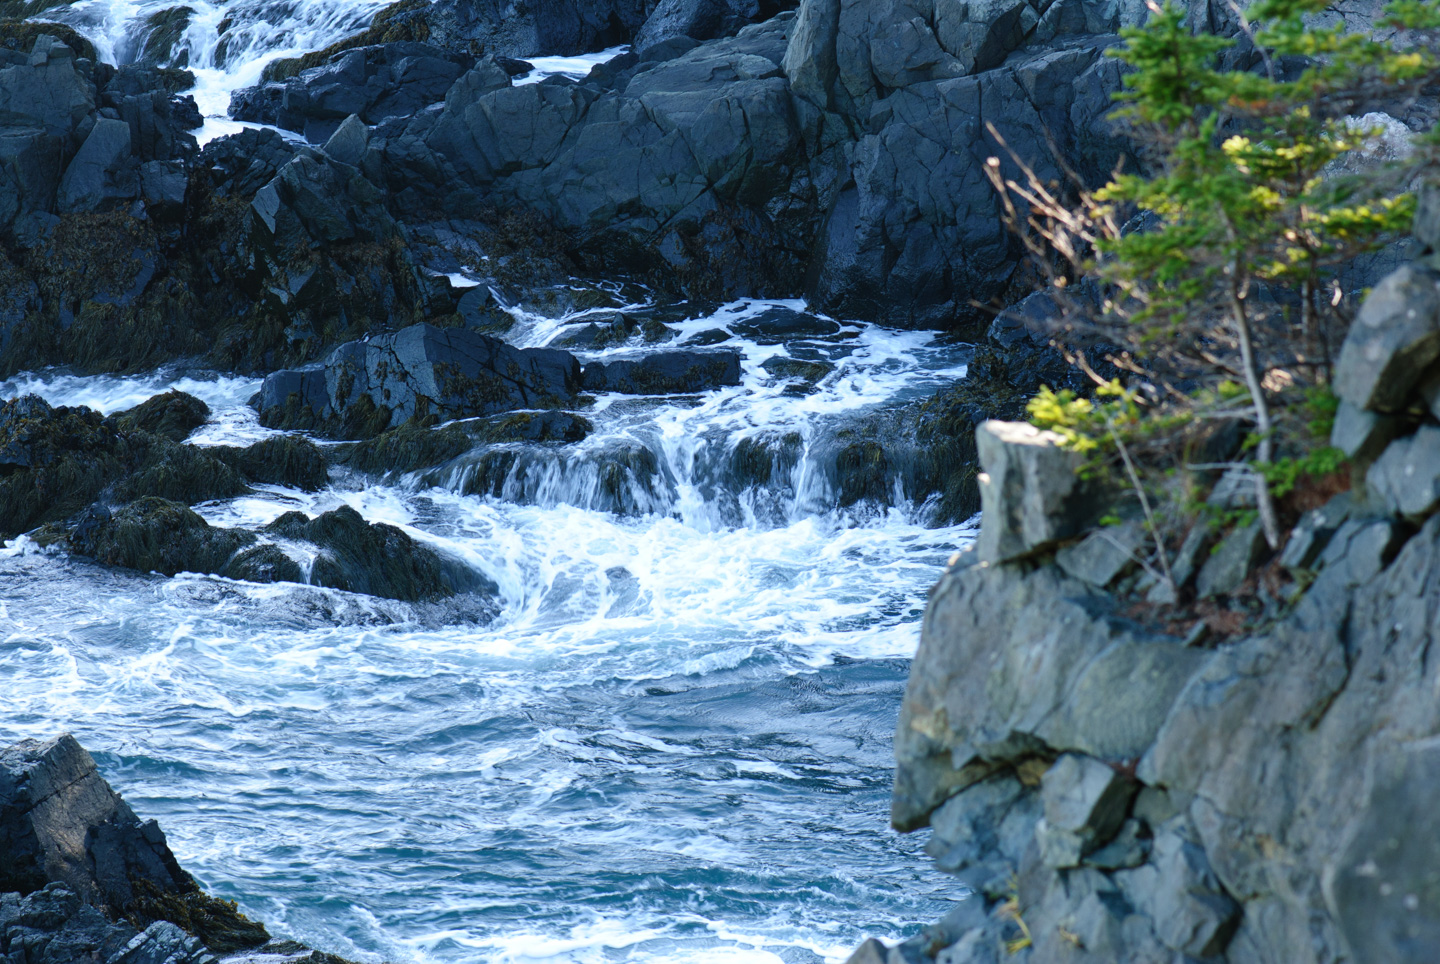 Ocean water flowing over rocks